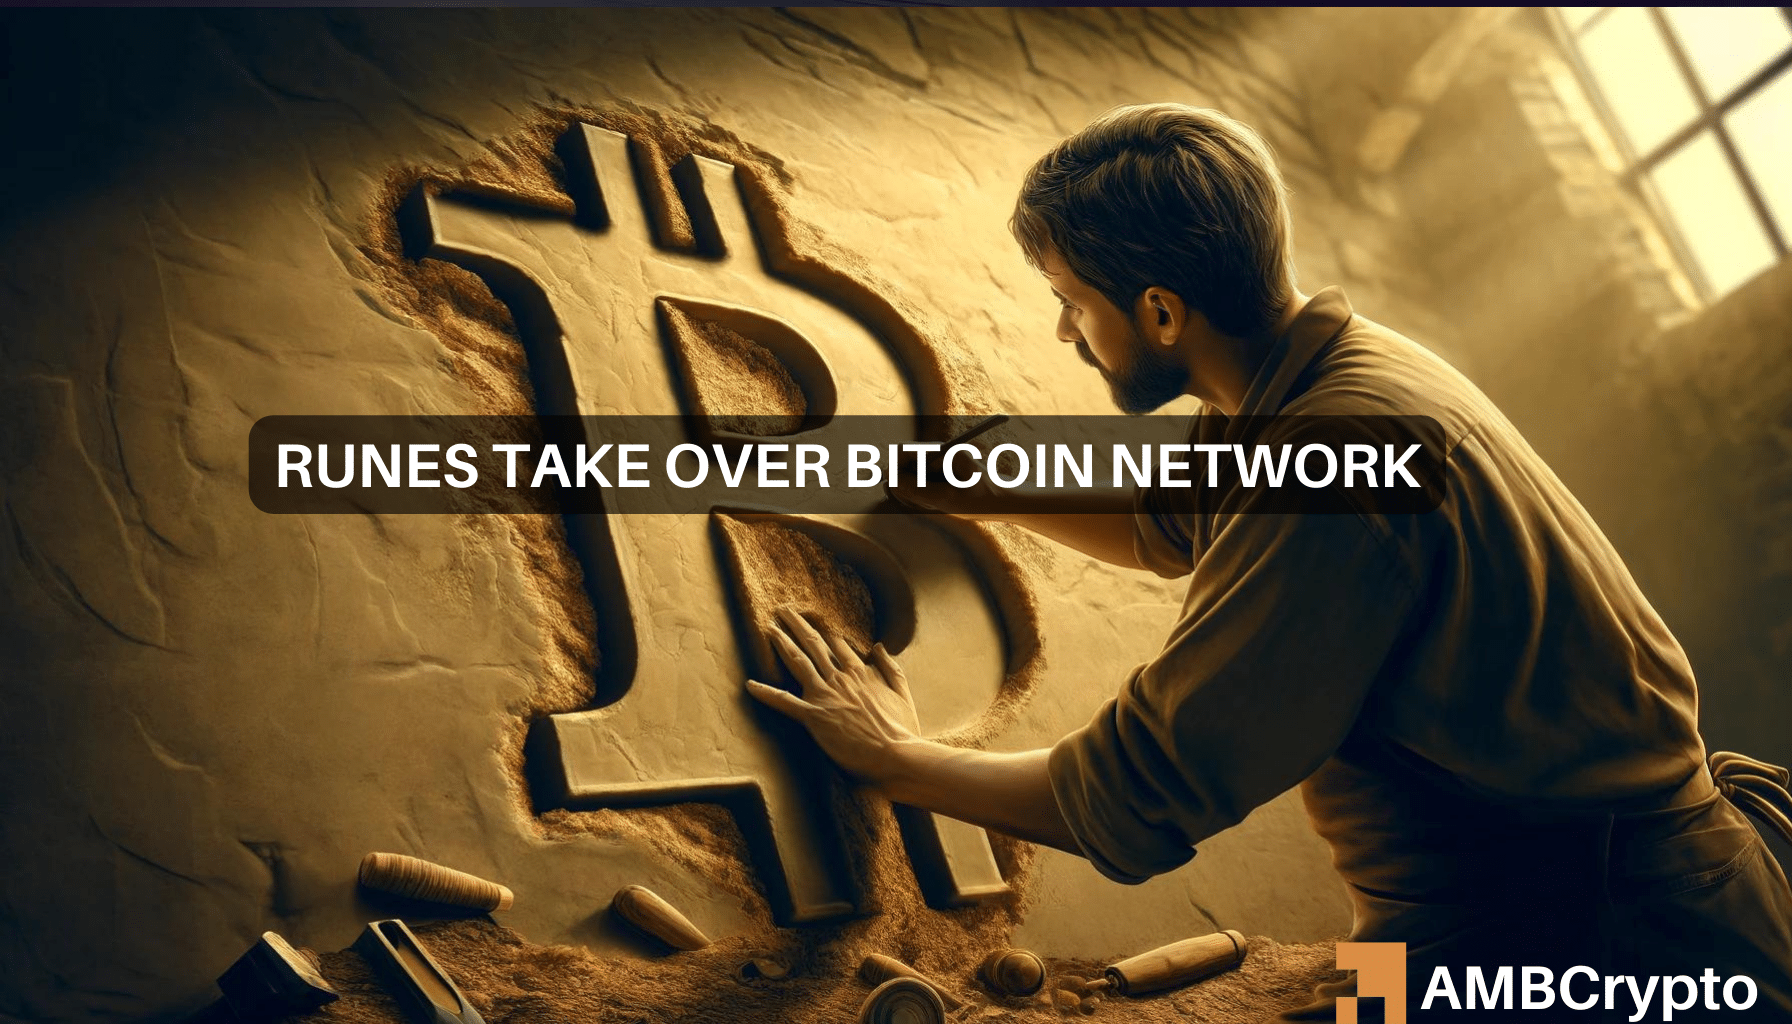 Bitcoin Runes take over? Exploring its top 3 milestones since launch